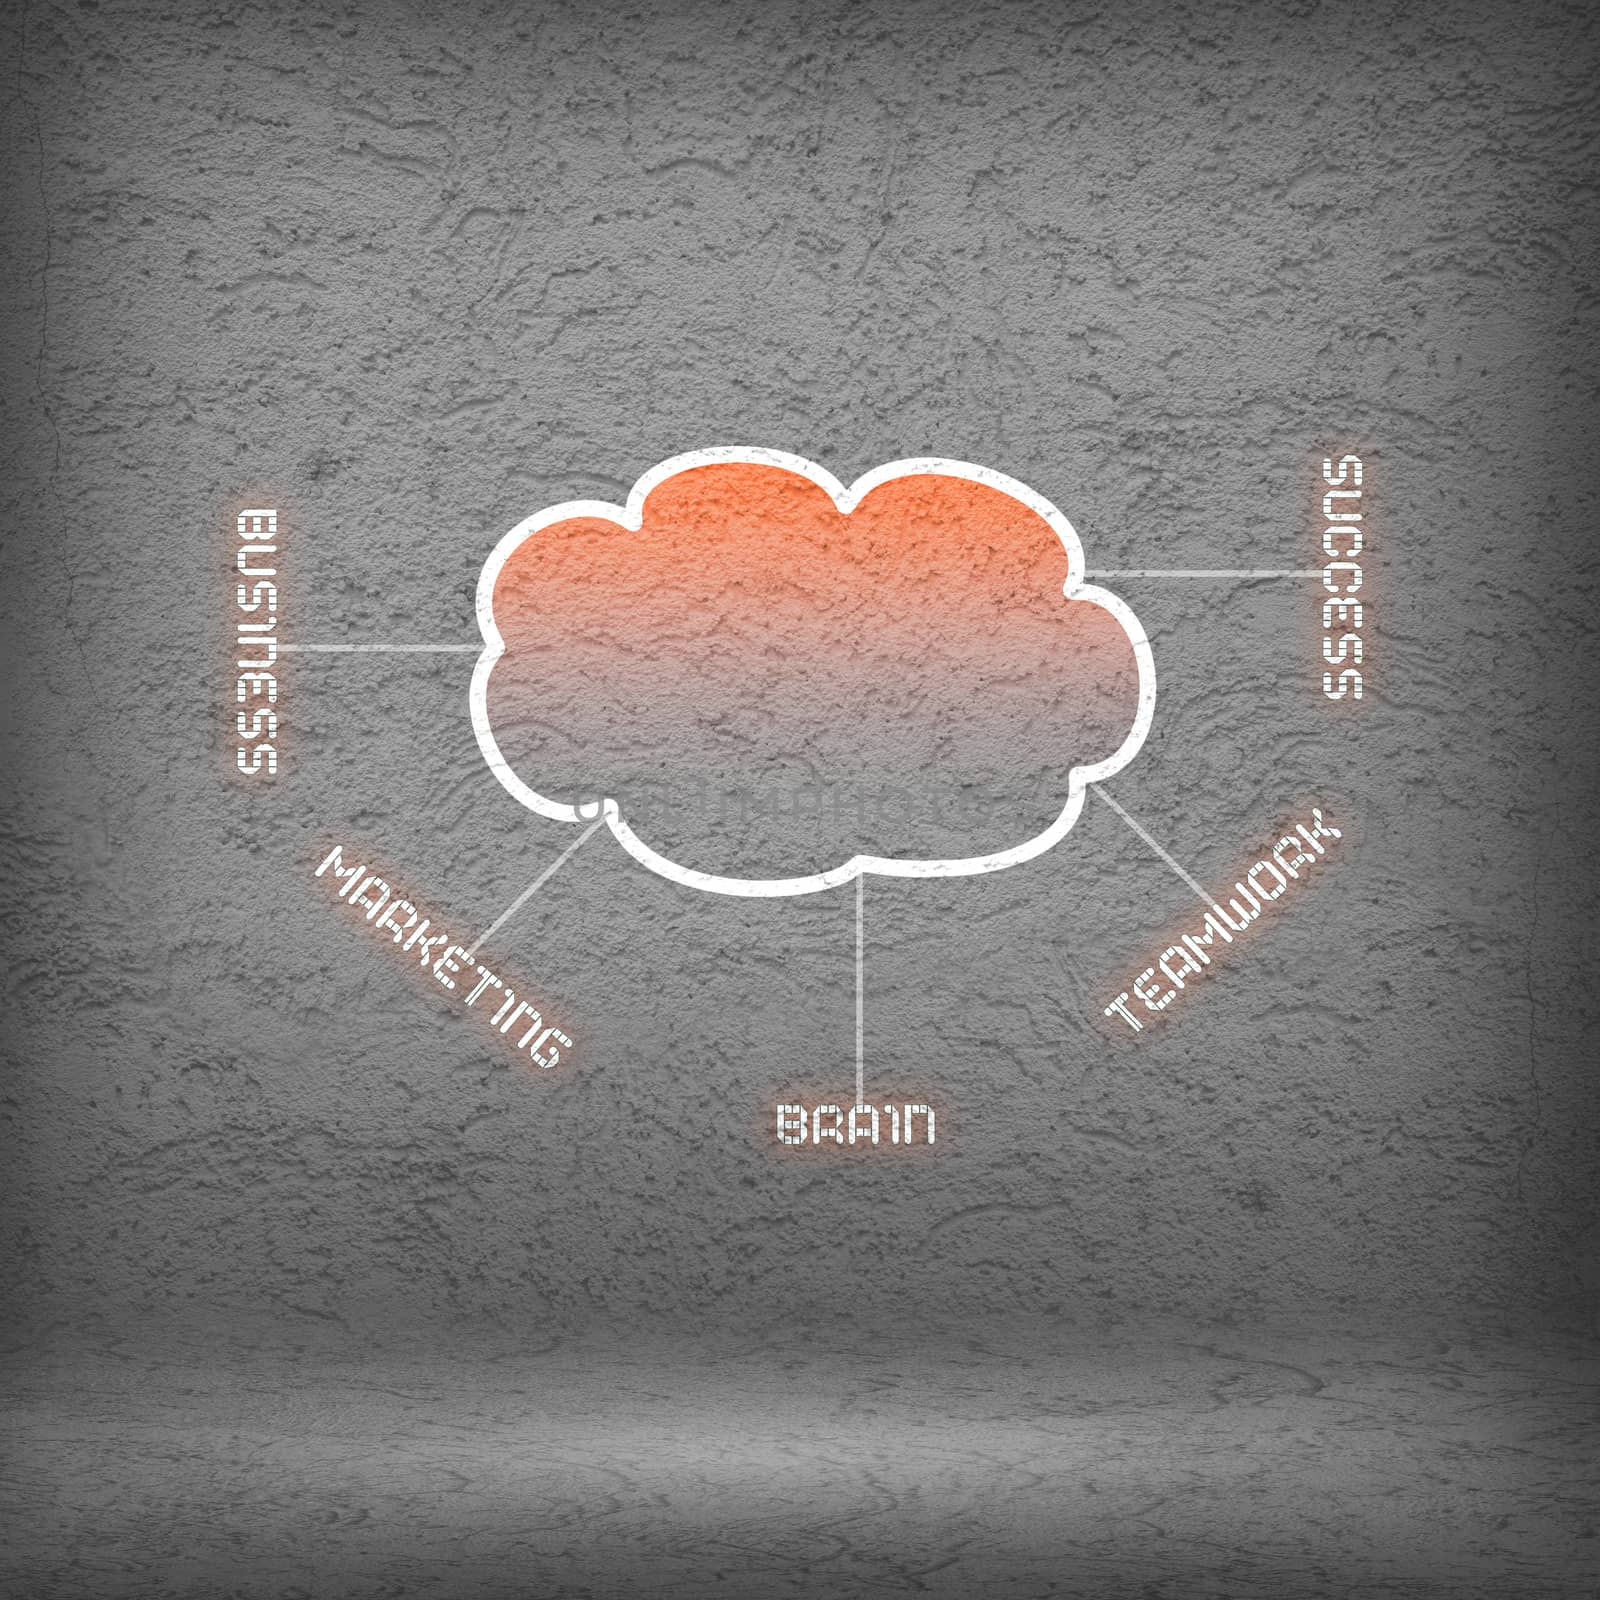 Computing cloud by adam121